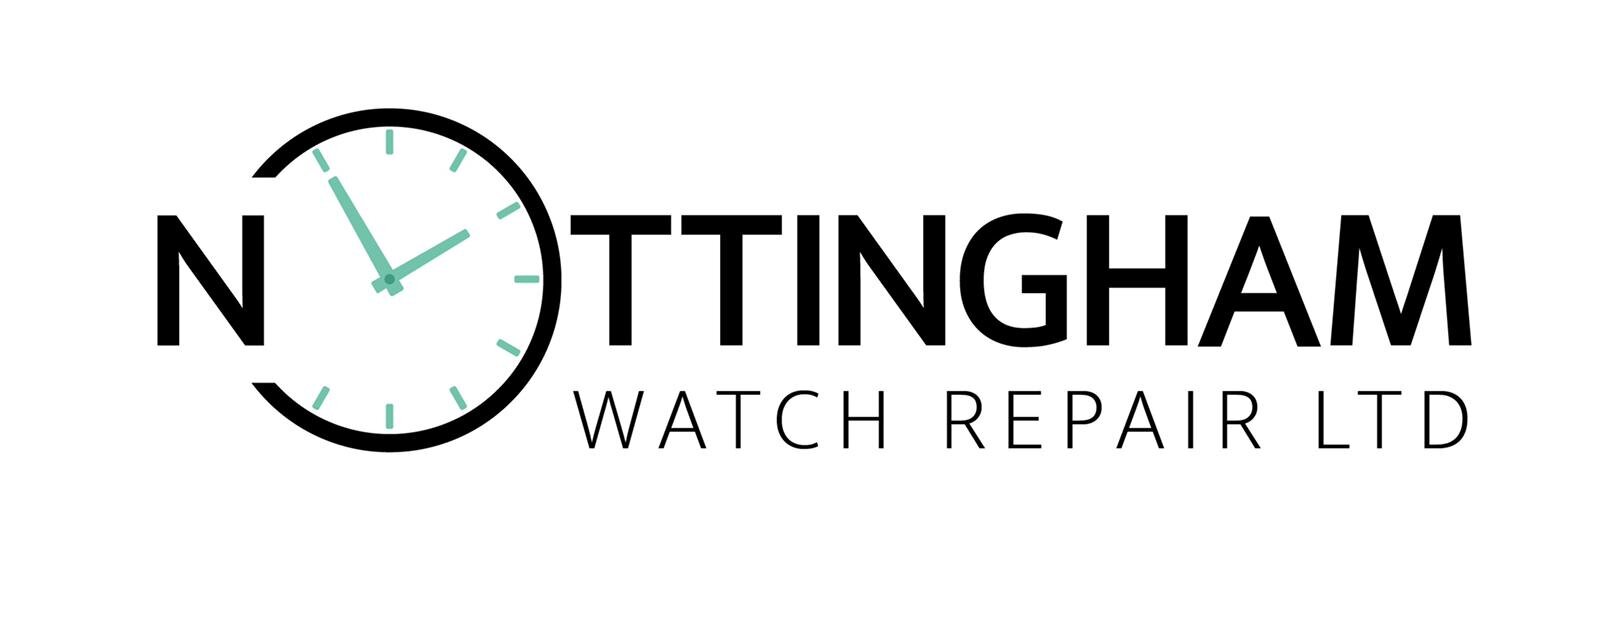 Watch Repairs in Nottingham